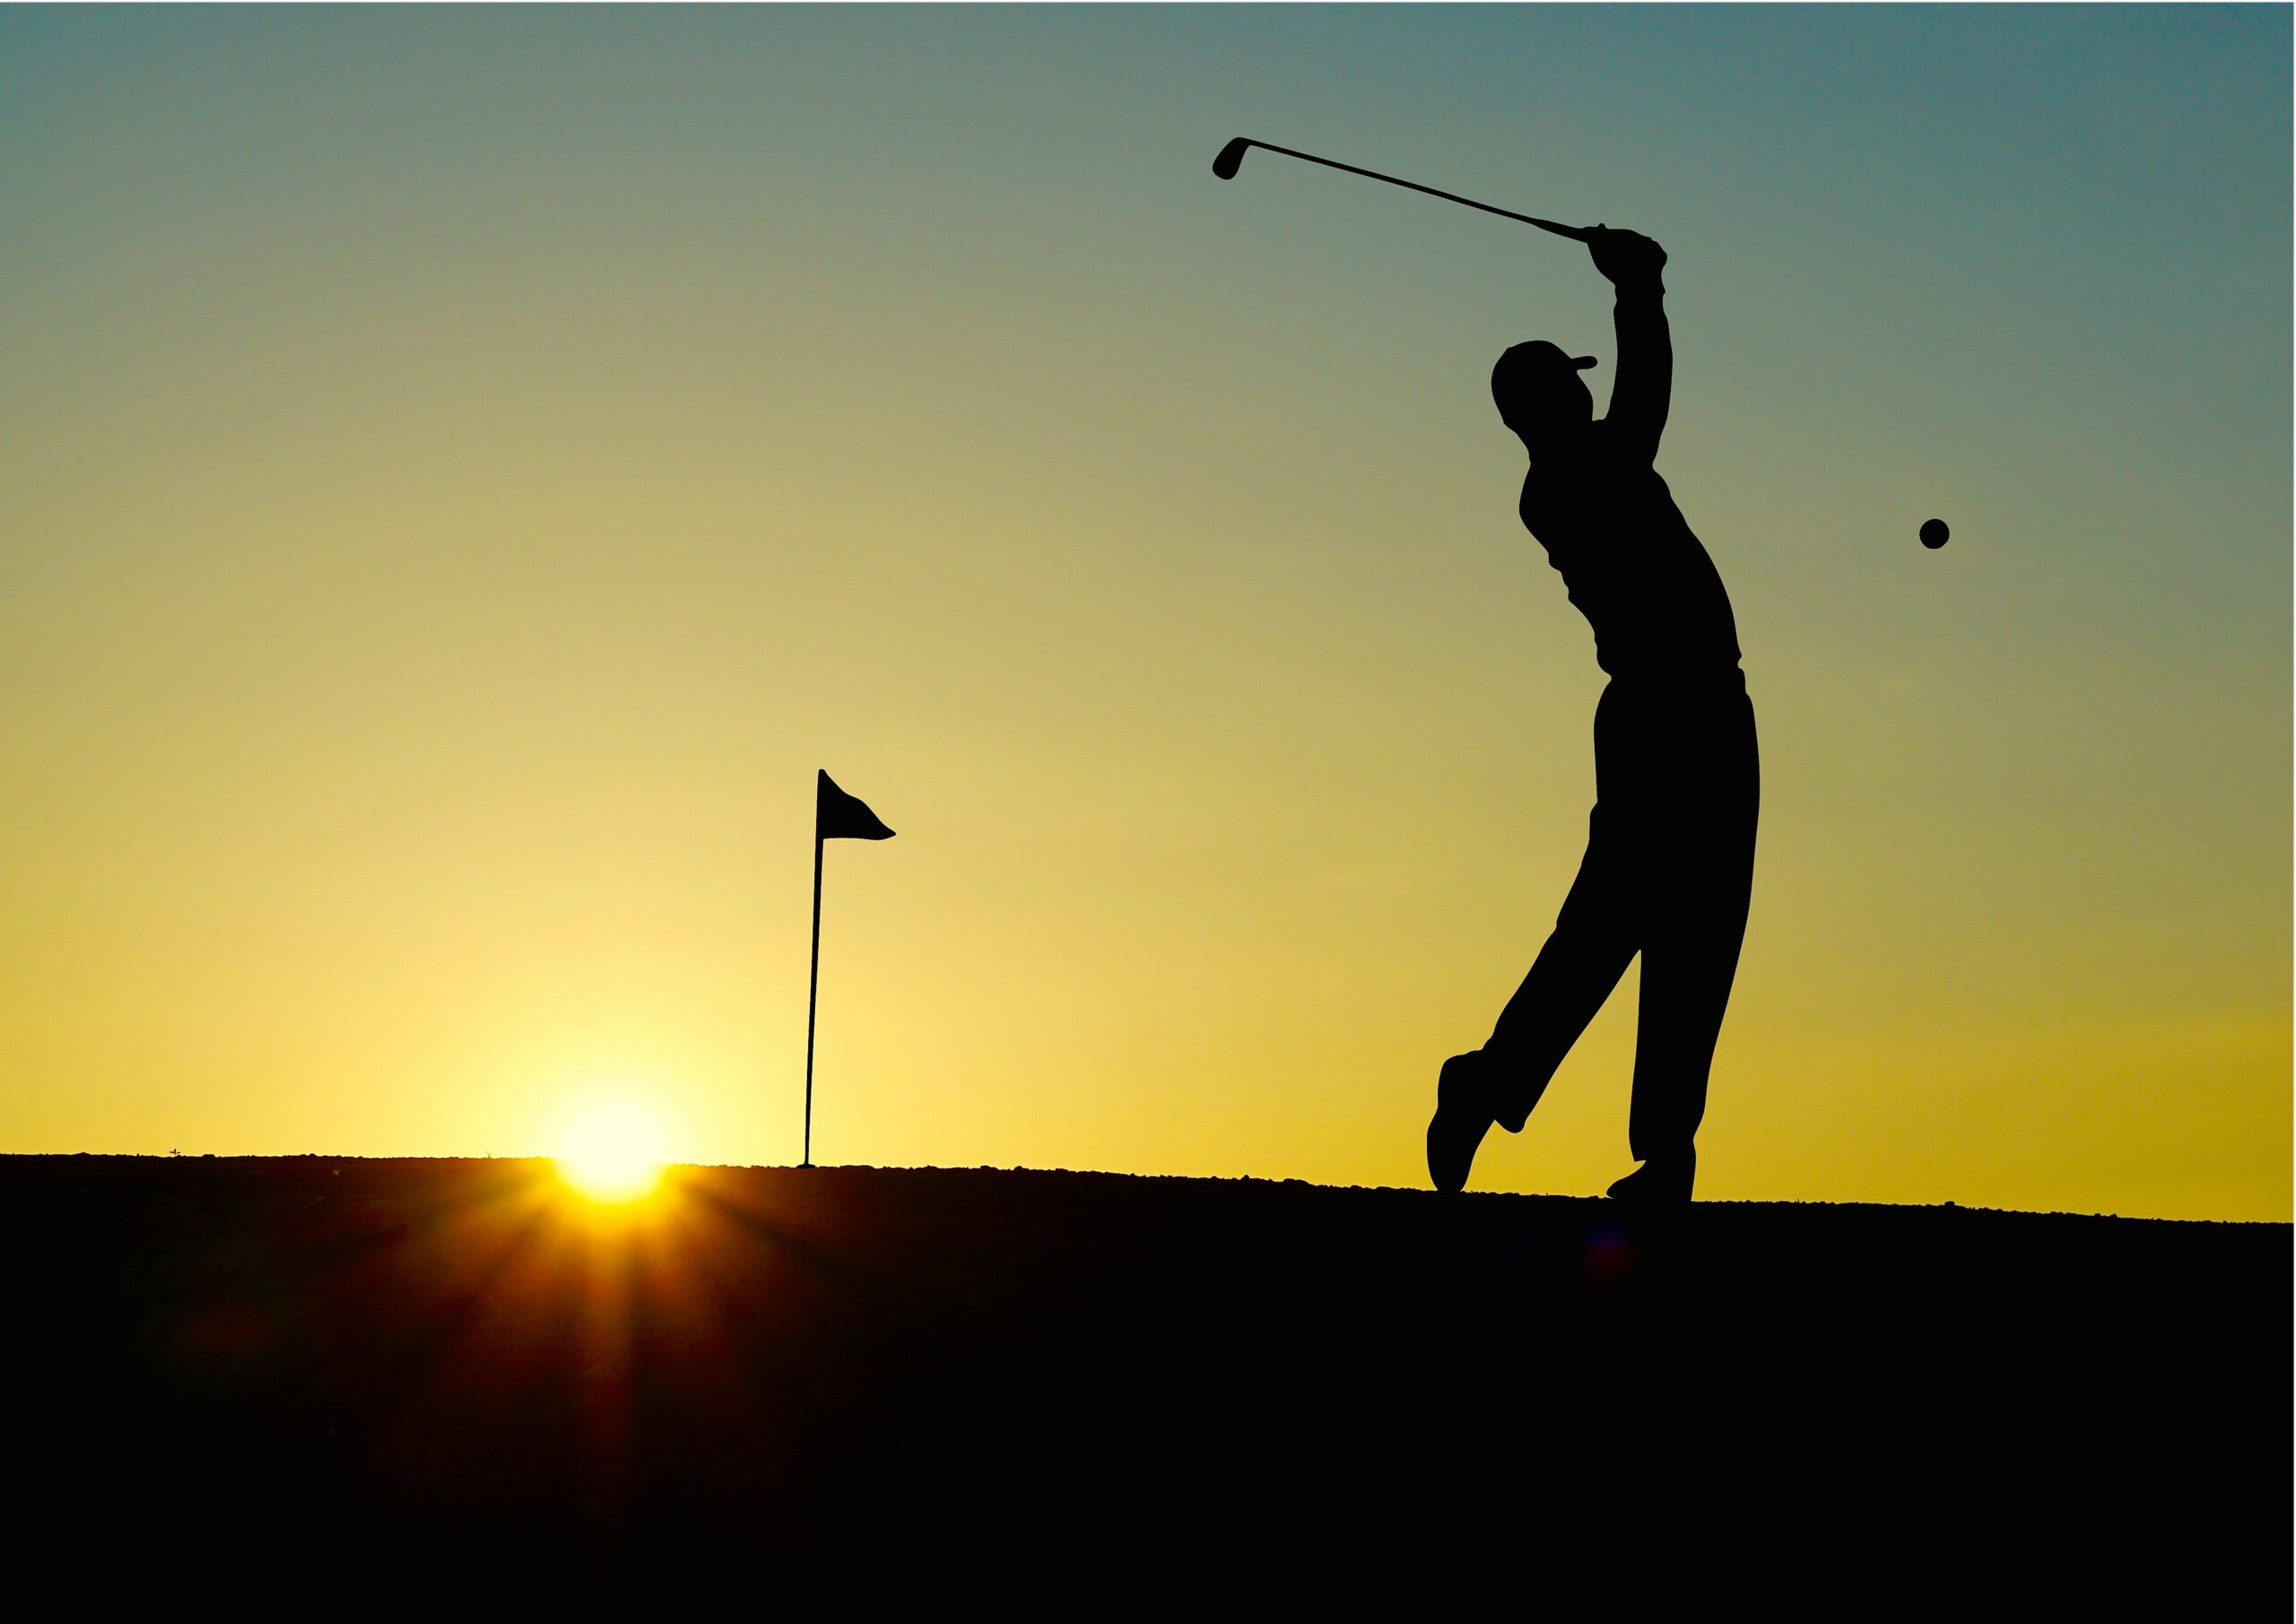 Image of a golfer swinging.